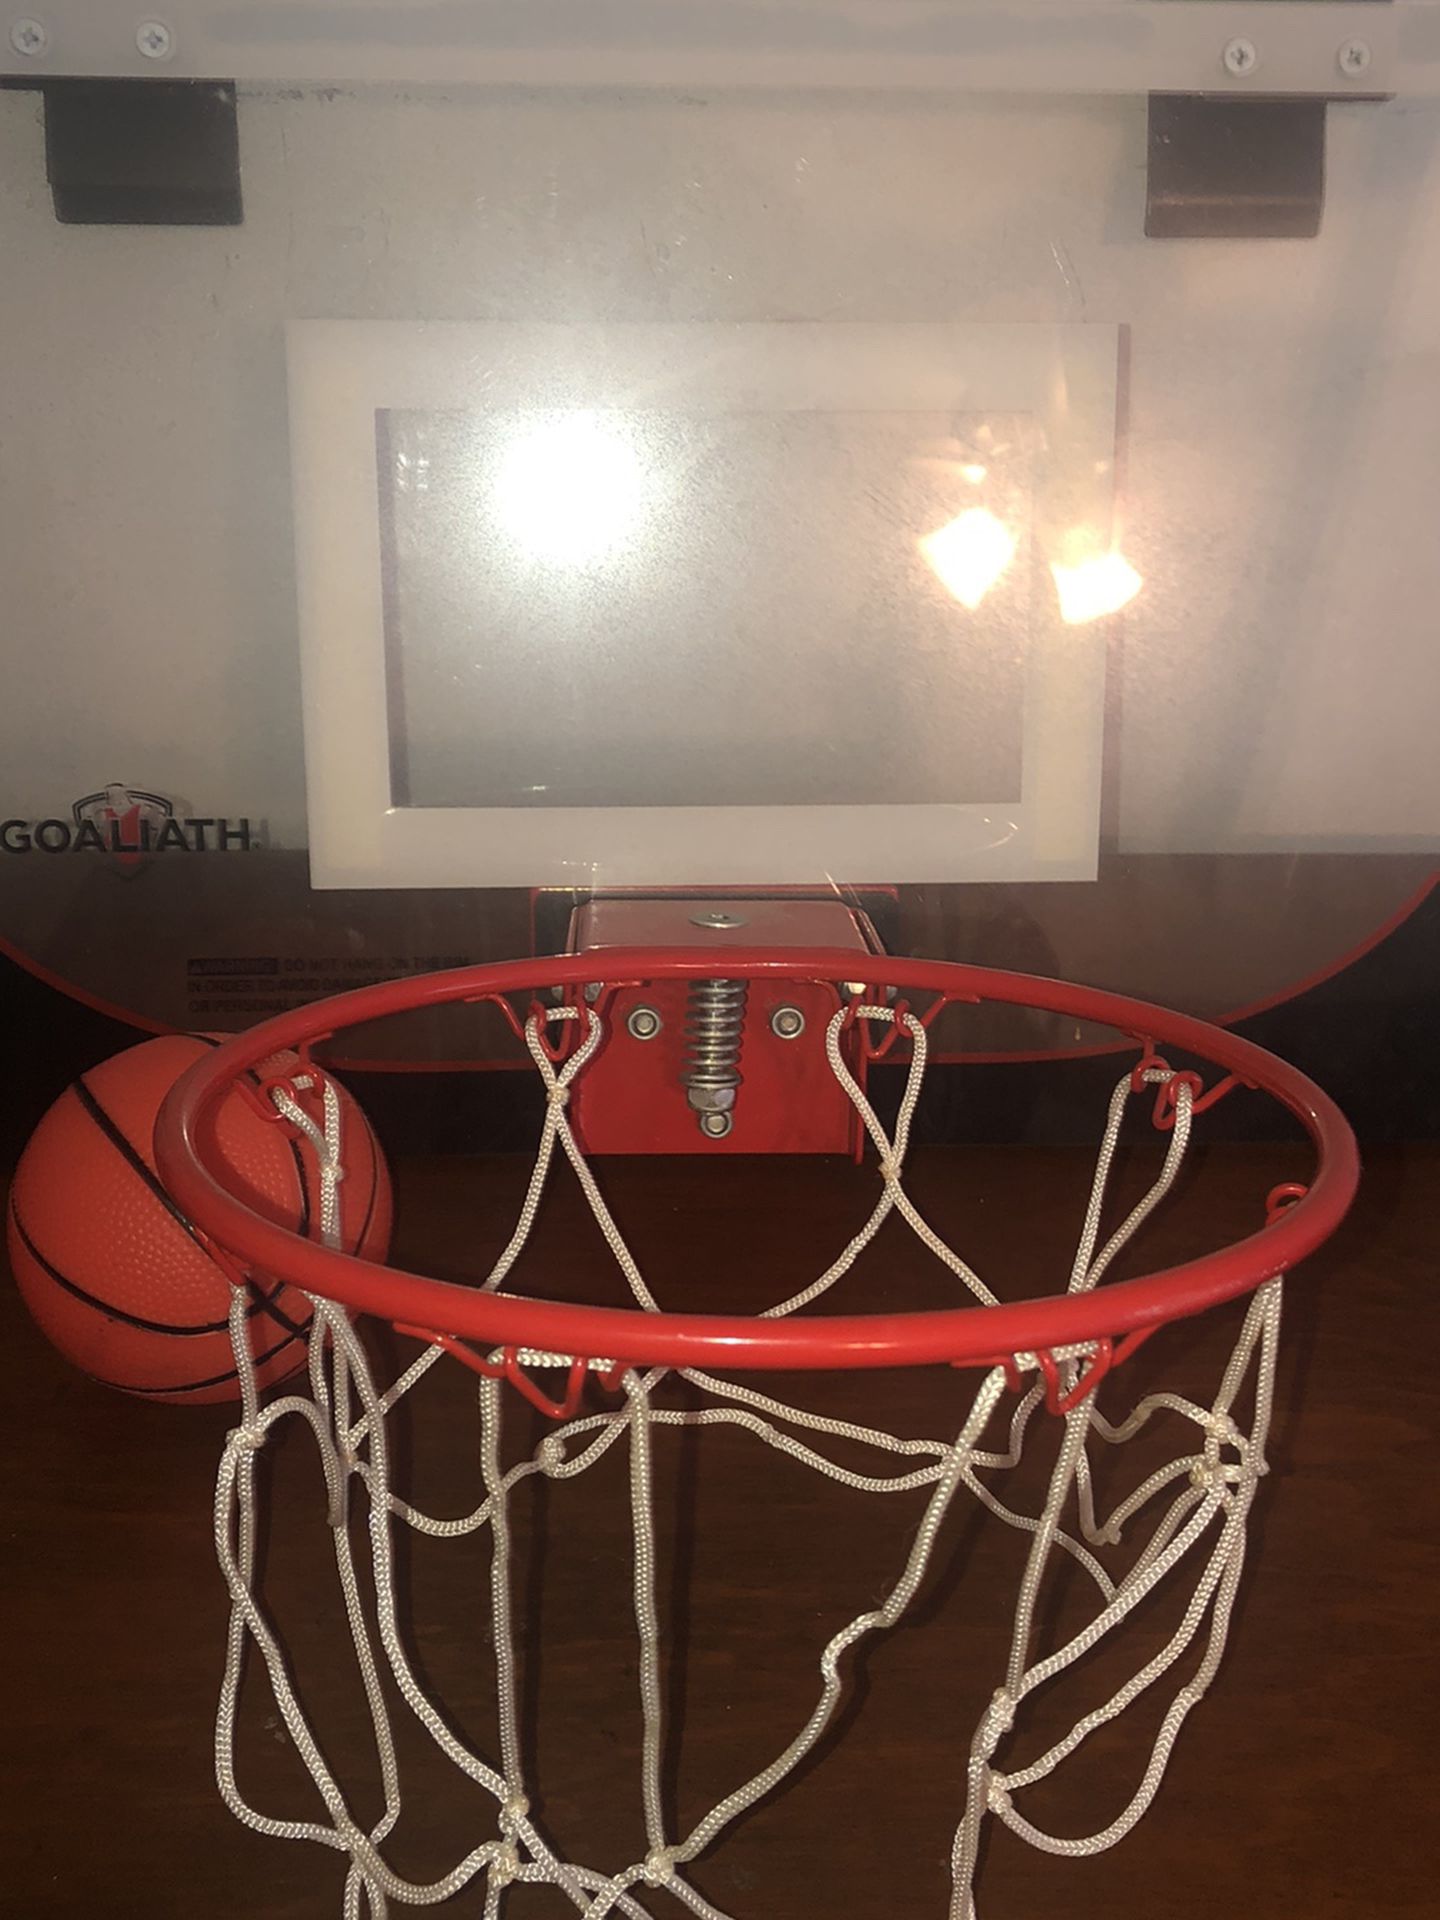 Goliath Door Basketball Net with Ball